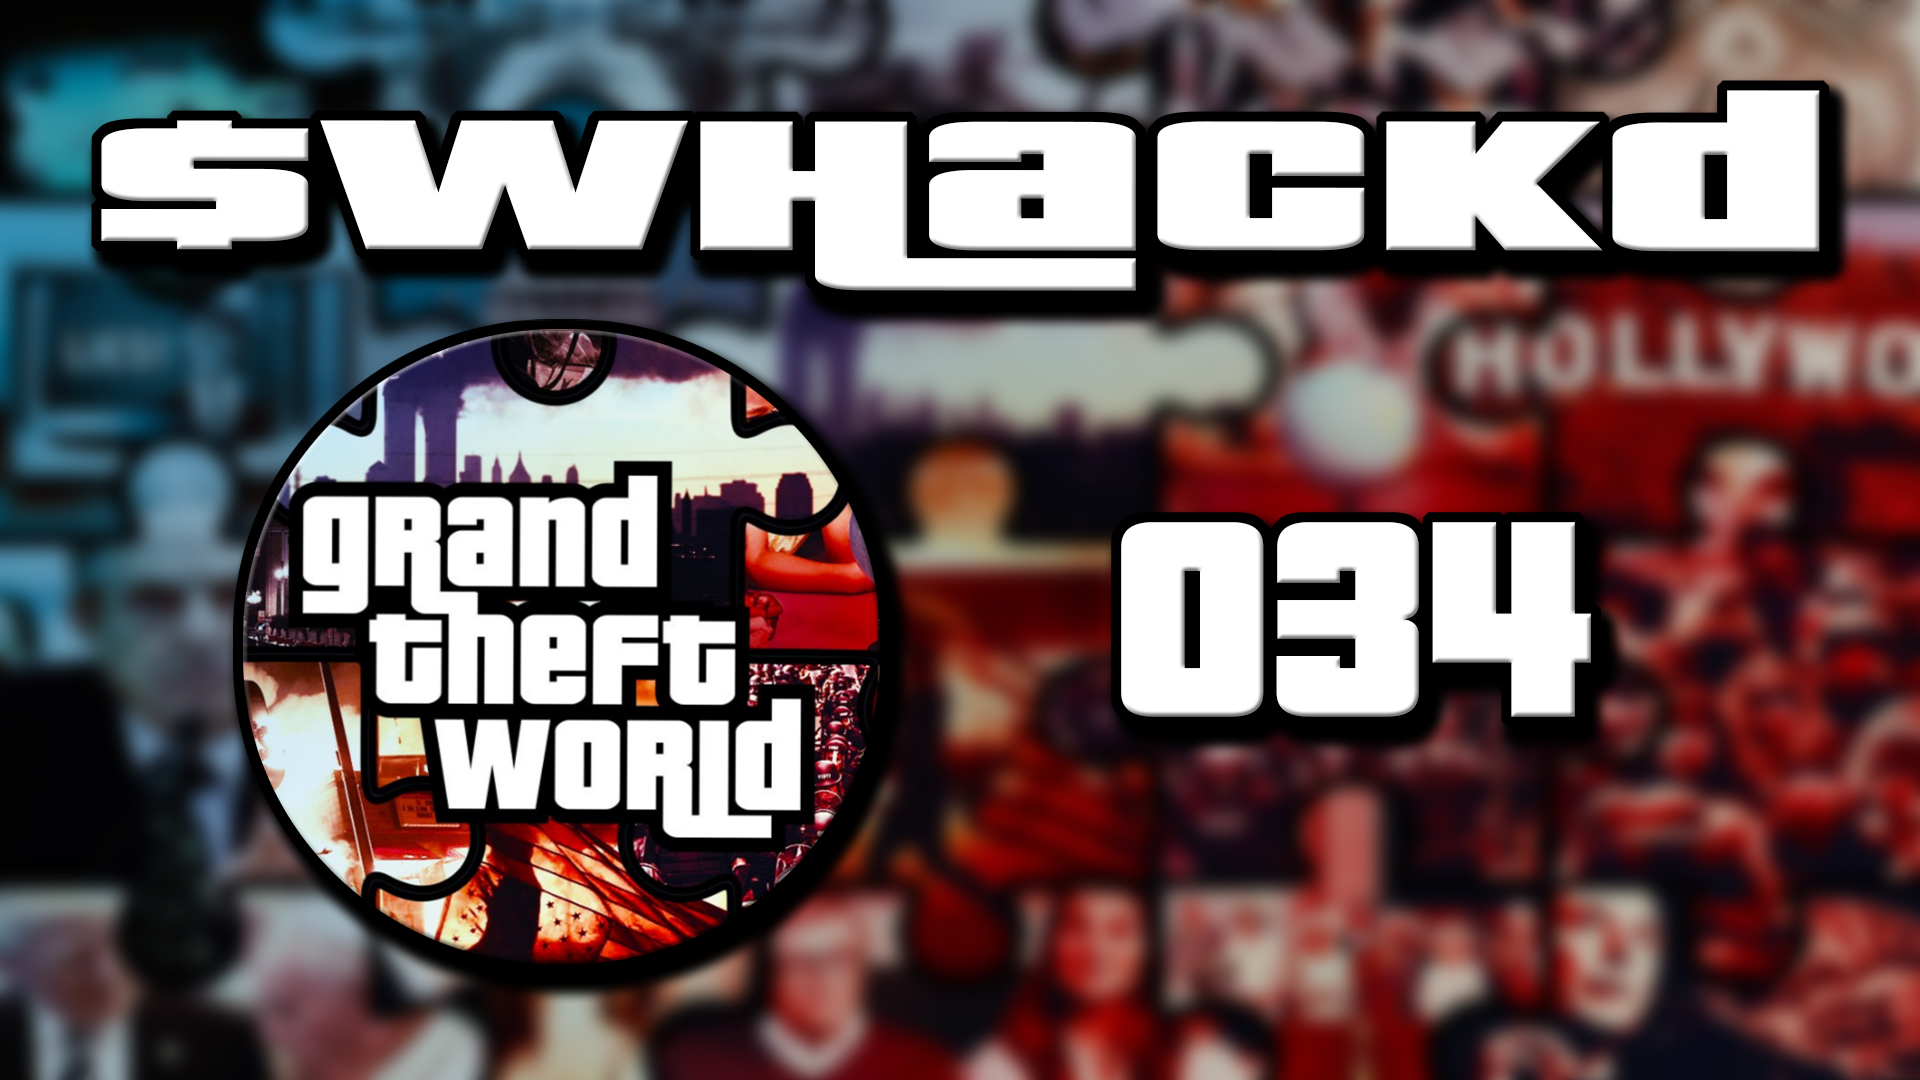 Grand Theft World Podcast 034 | $WHACKD